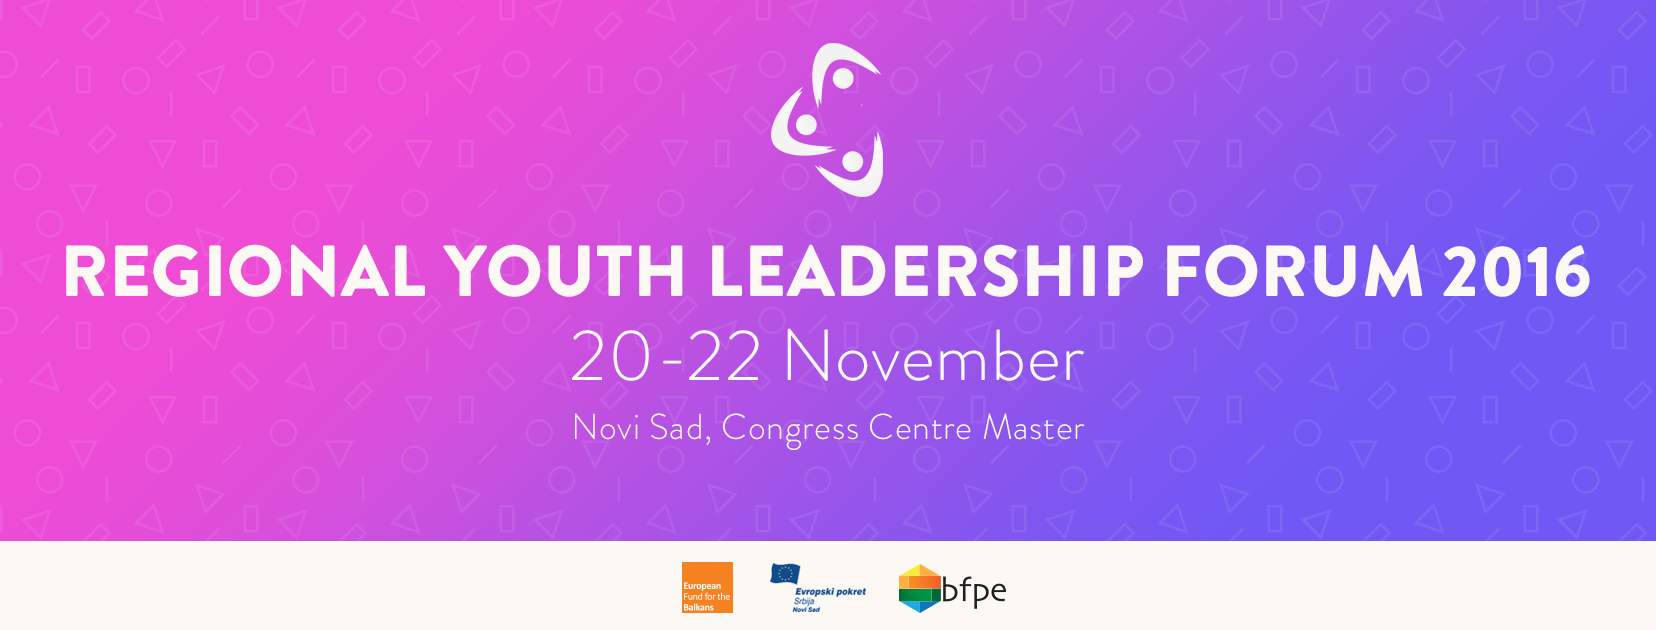 Regional Youth Leadership Forum 2016